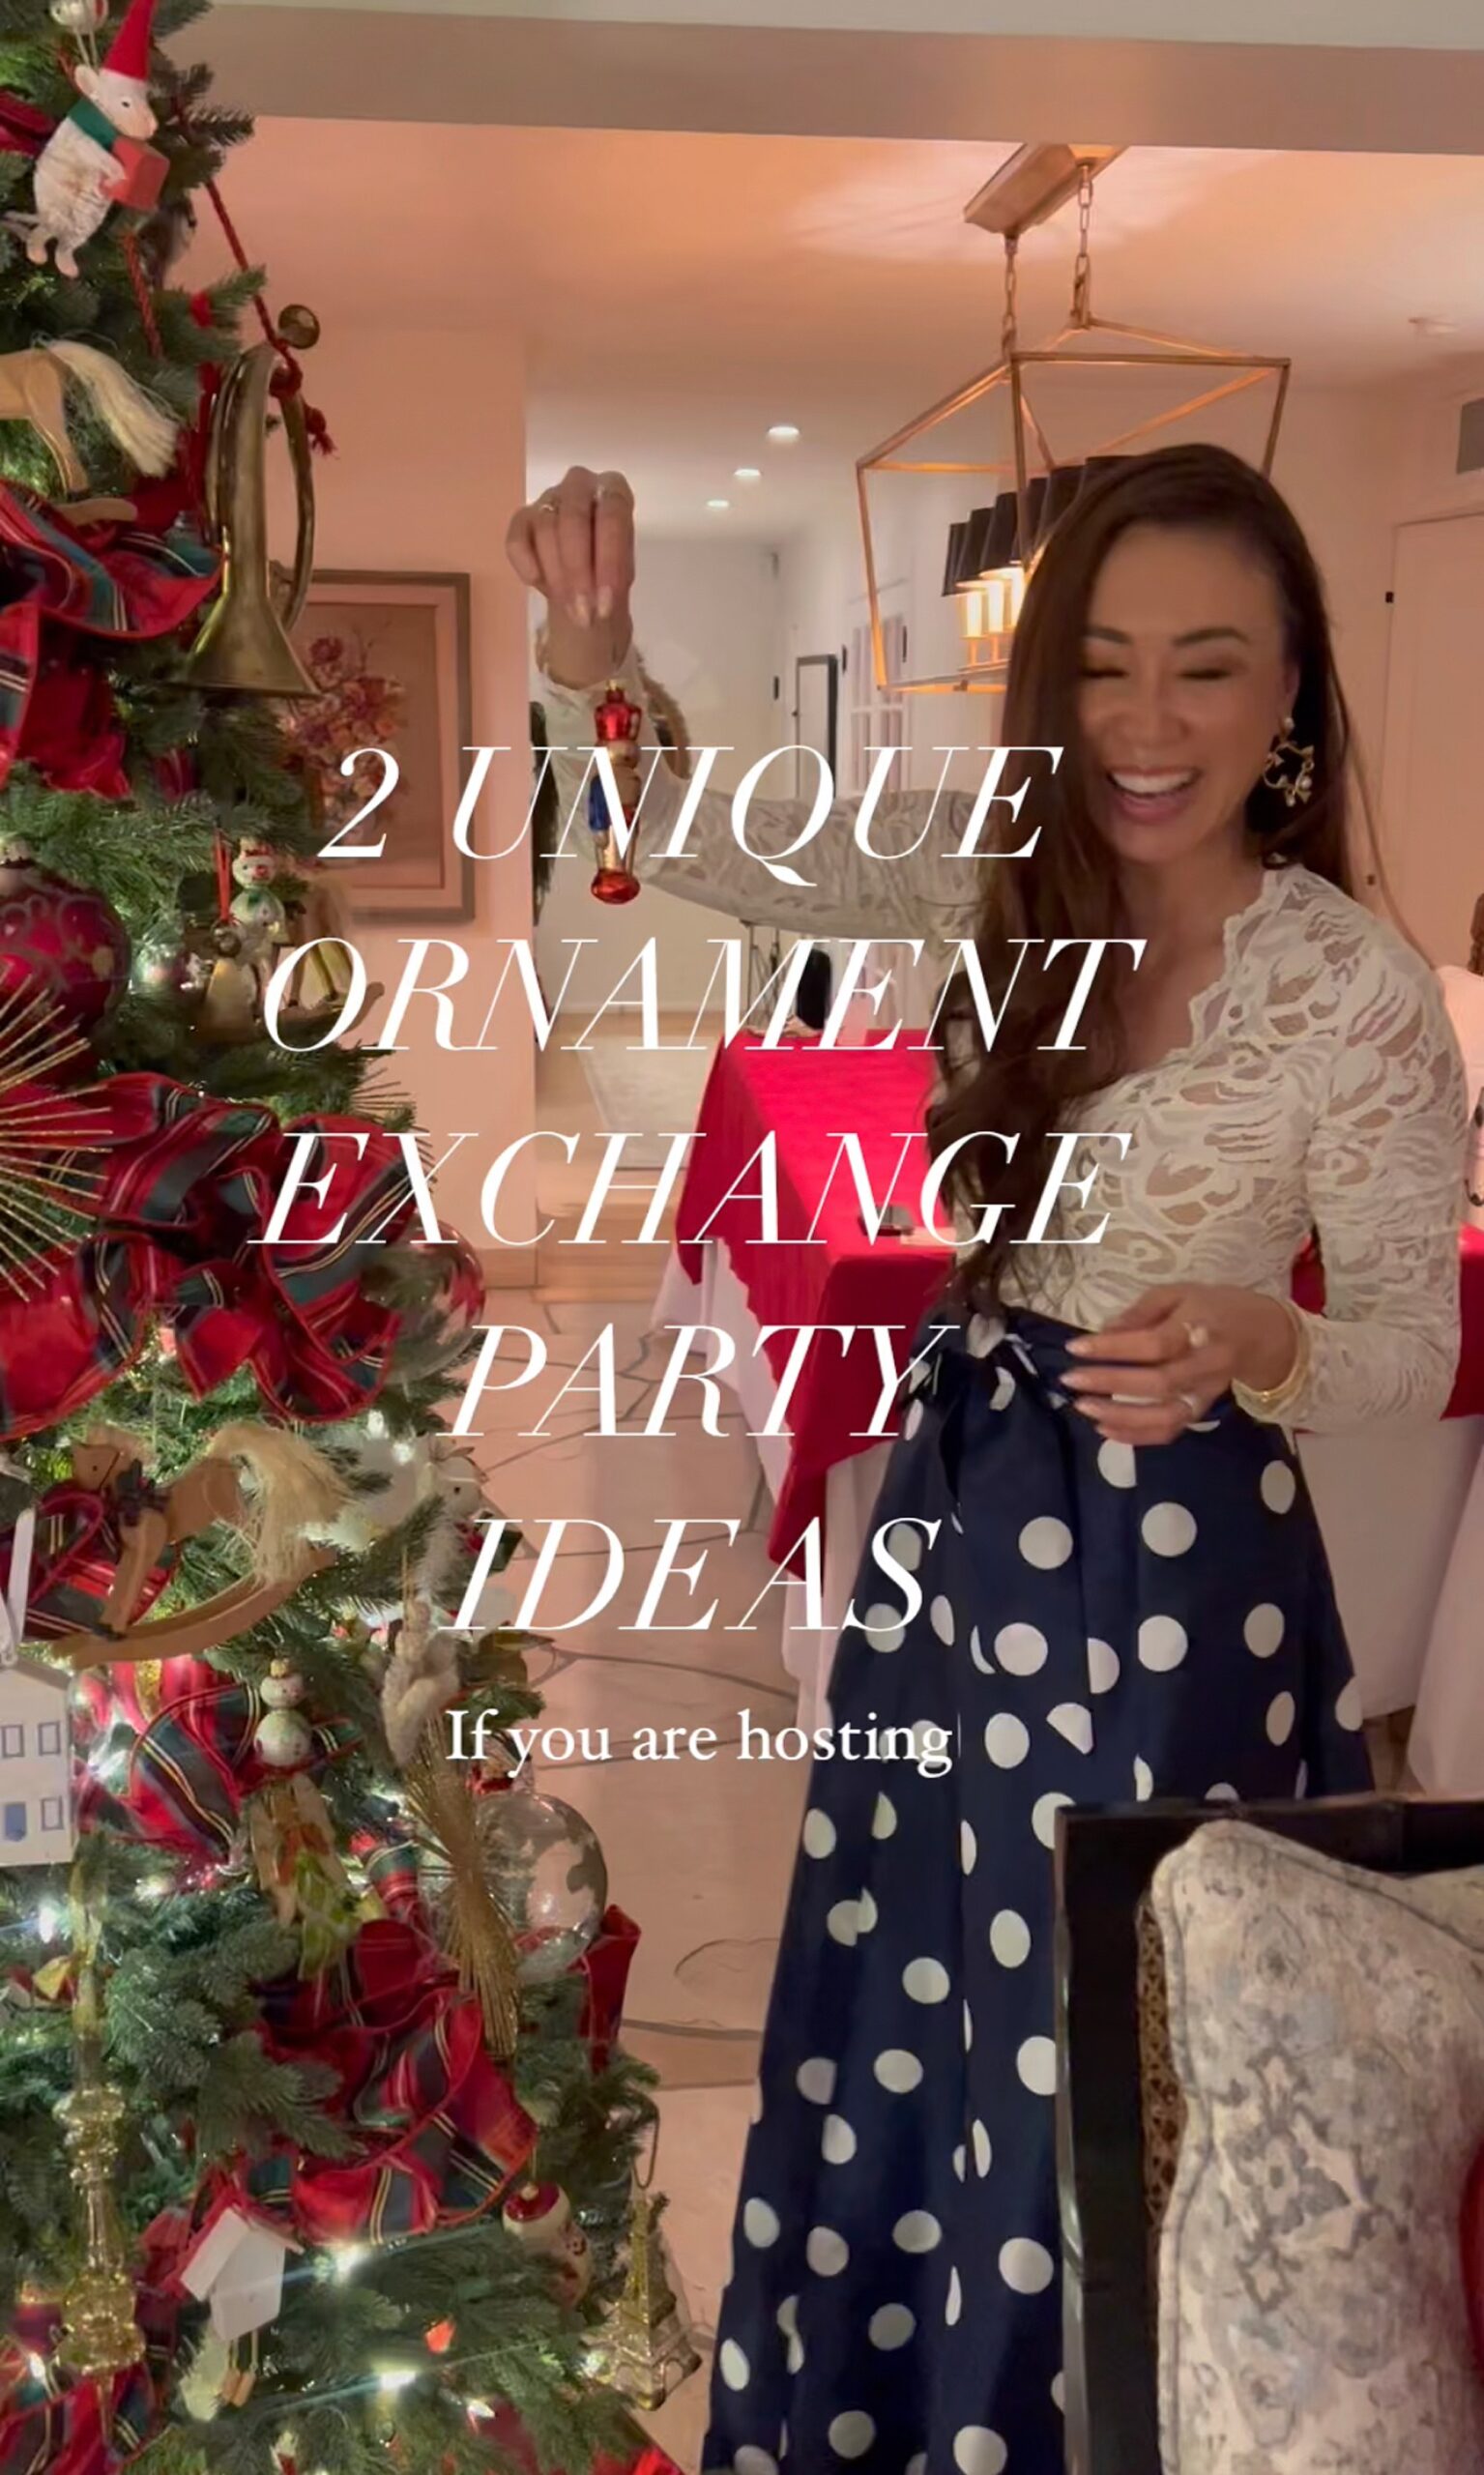 2 unique ideas for your ornament exchange party yankee swap party